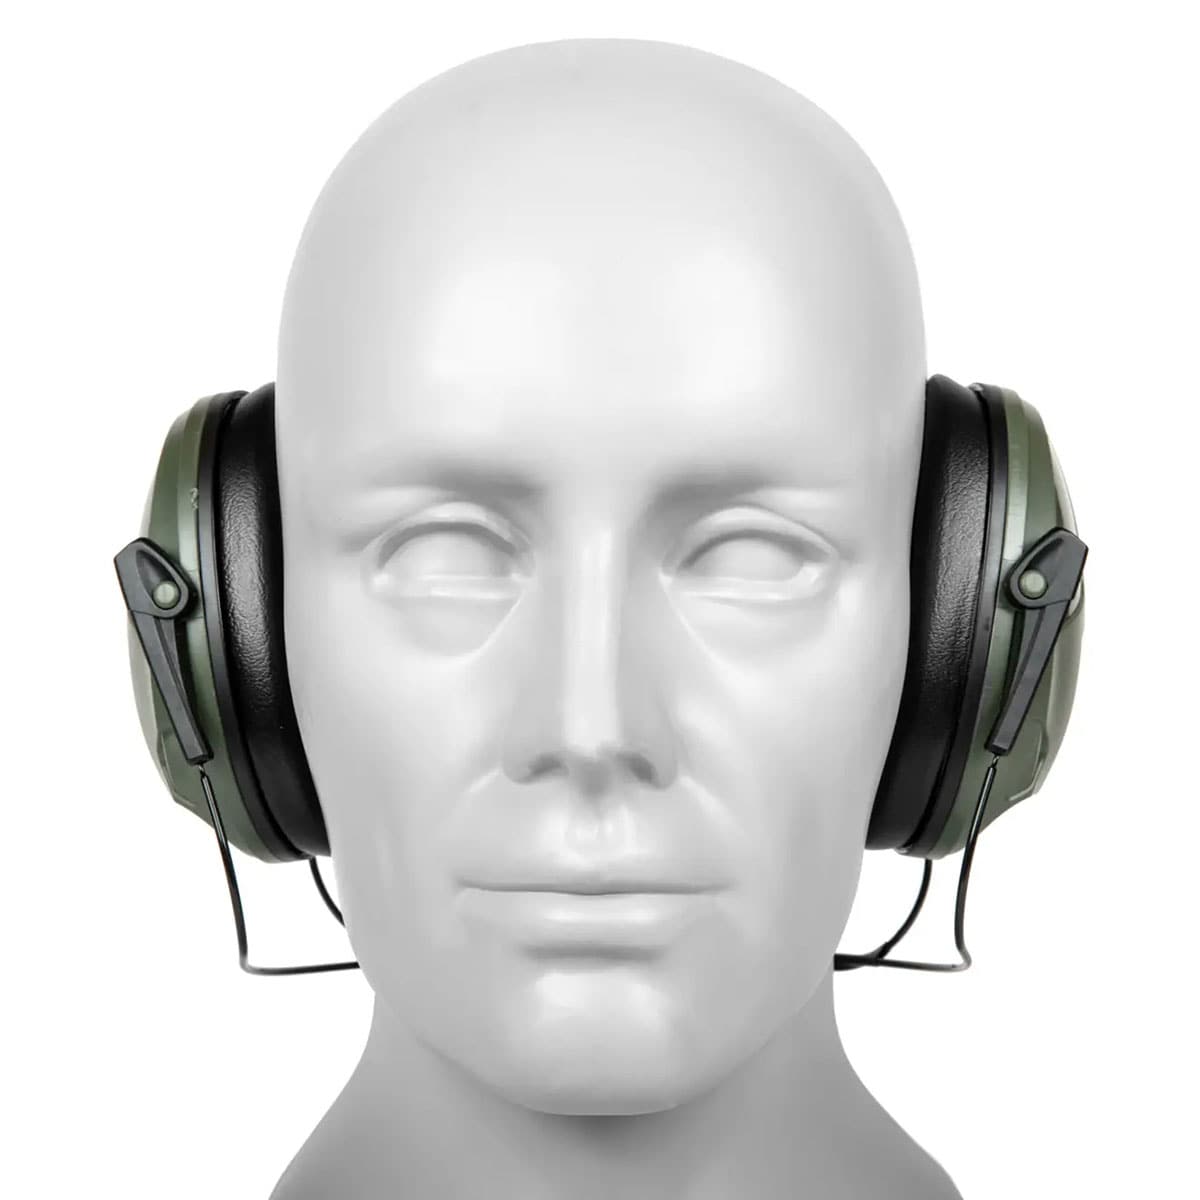 Ochronniki słuchu pasywne IPSC Ultimate Tactical - Oliwkowe